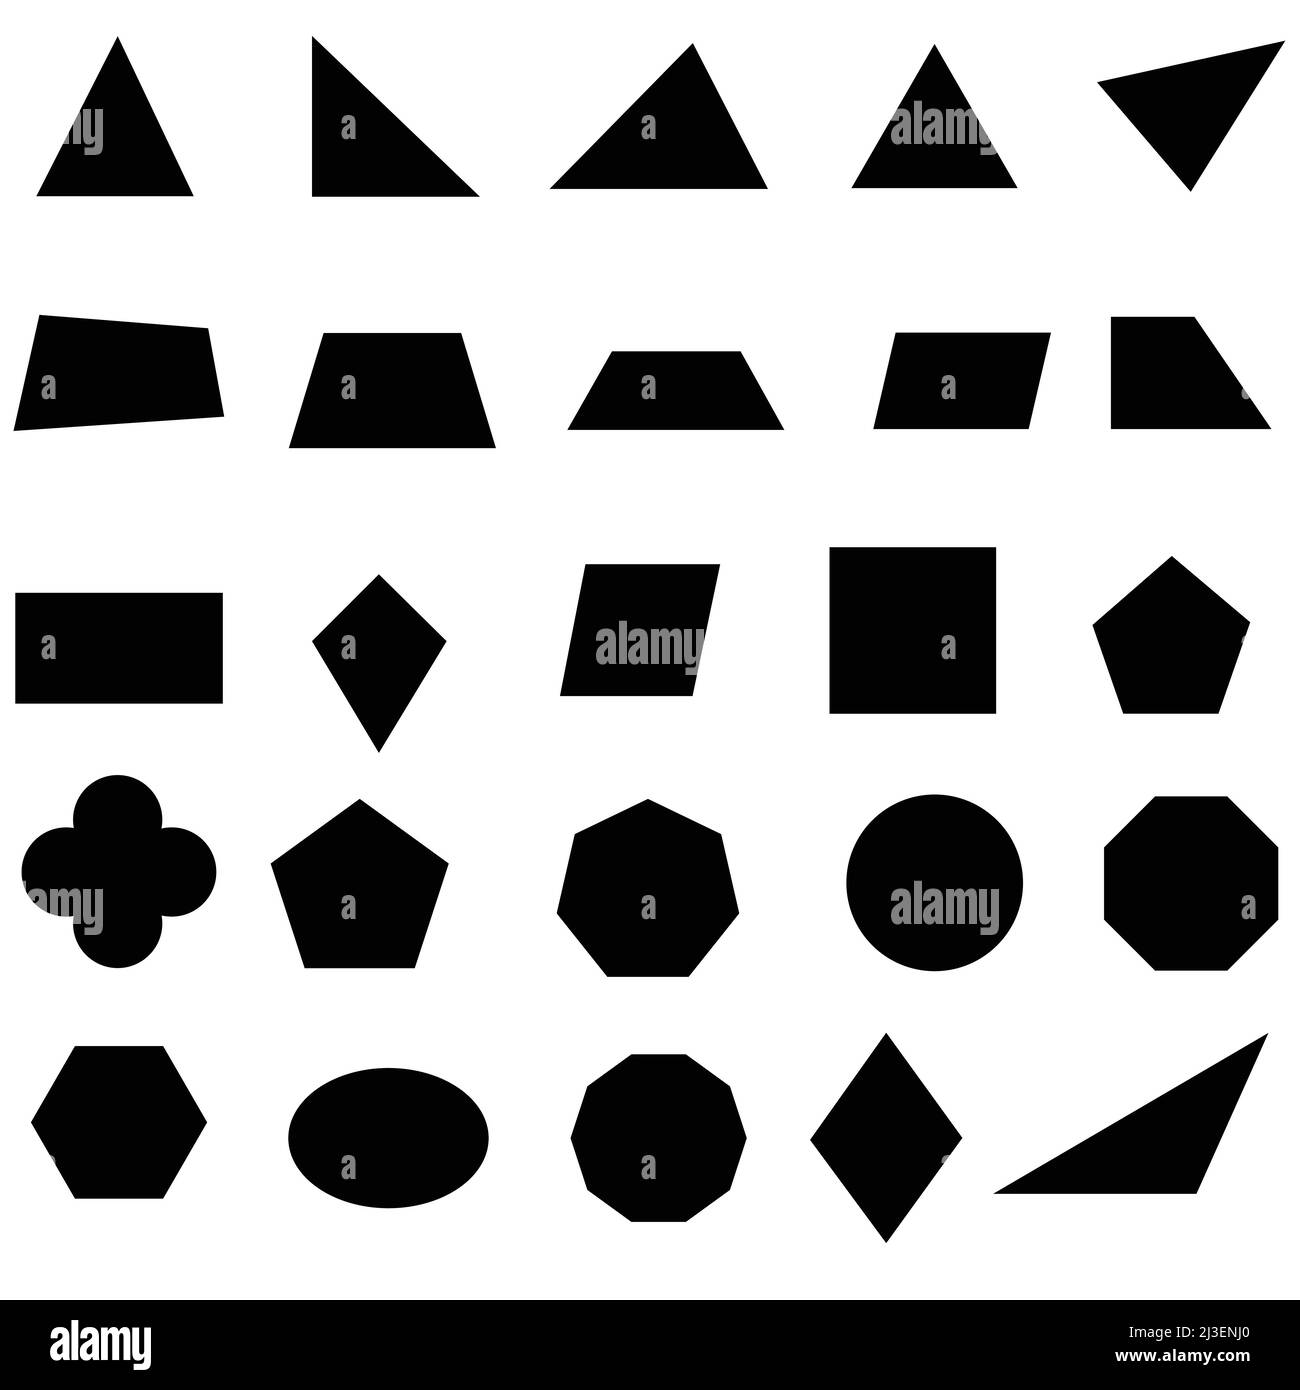 Black geometric shapes isolated on white background. Flat elements set vector illustration. Stock Vector